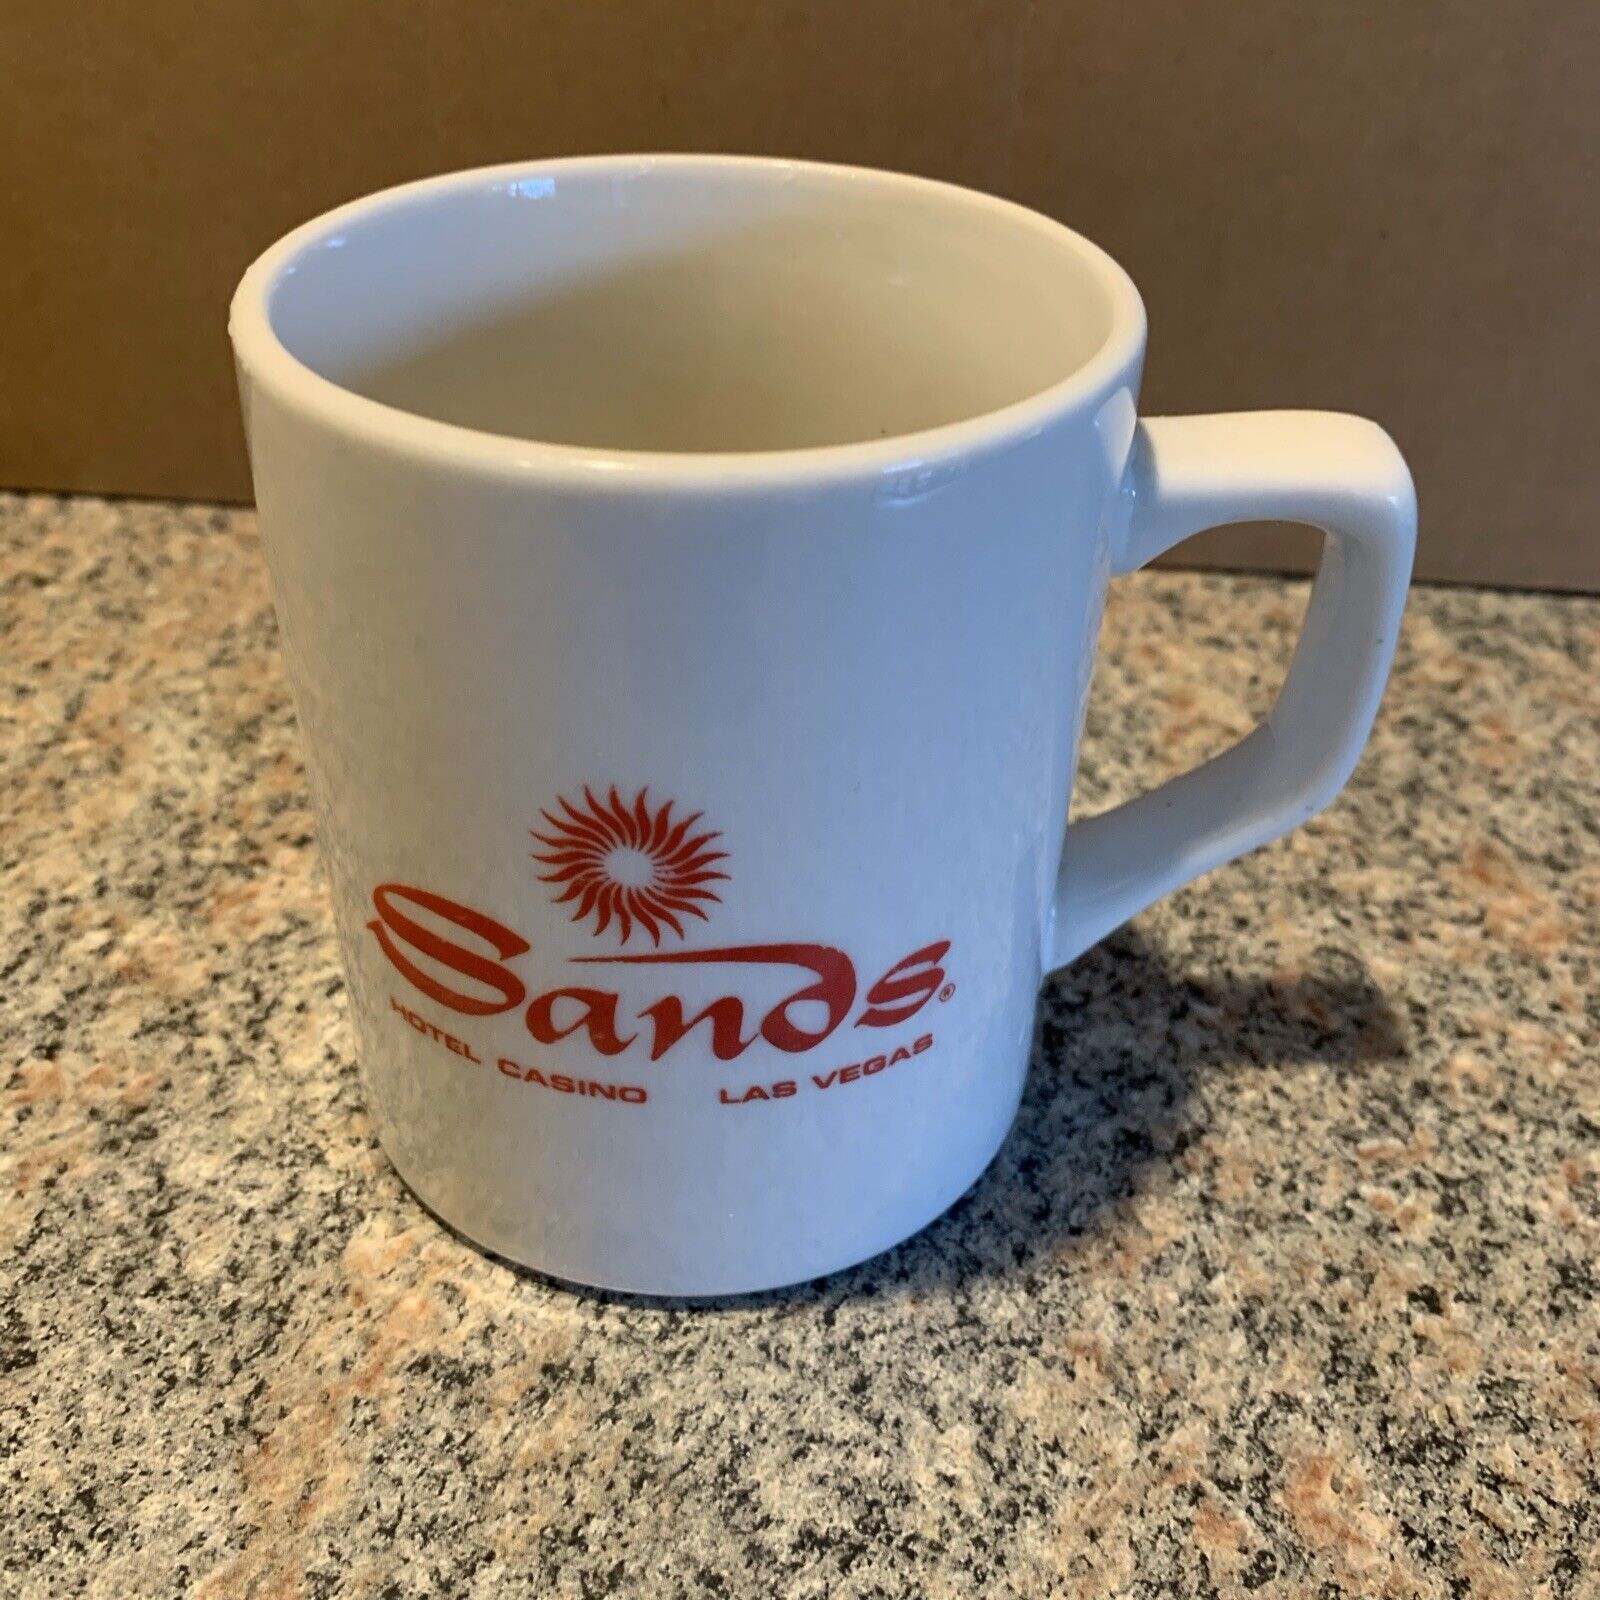 Sands Casino Coffee Cup Mug Las Vegas Hotel Souvenir Beige Ceramic Collectible